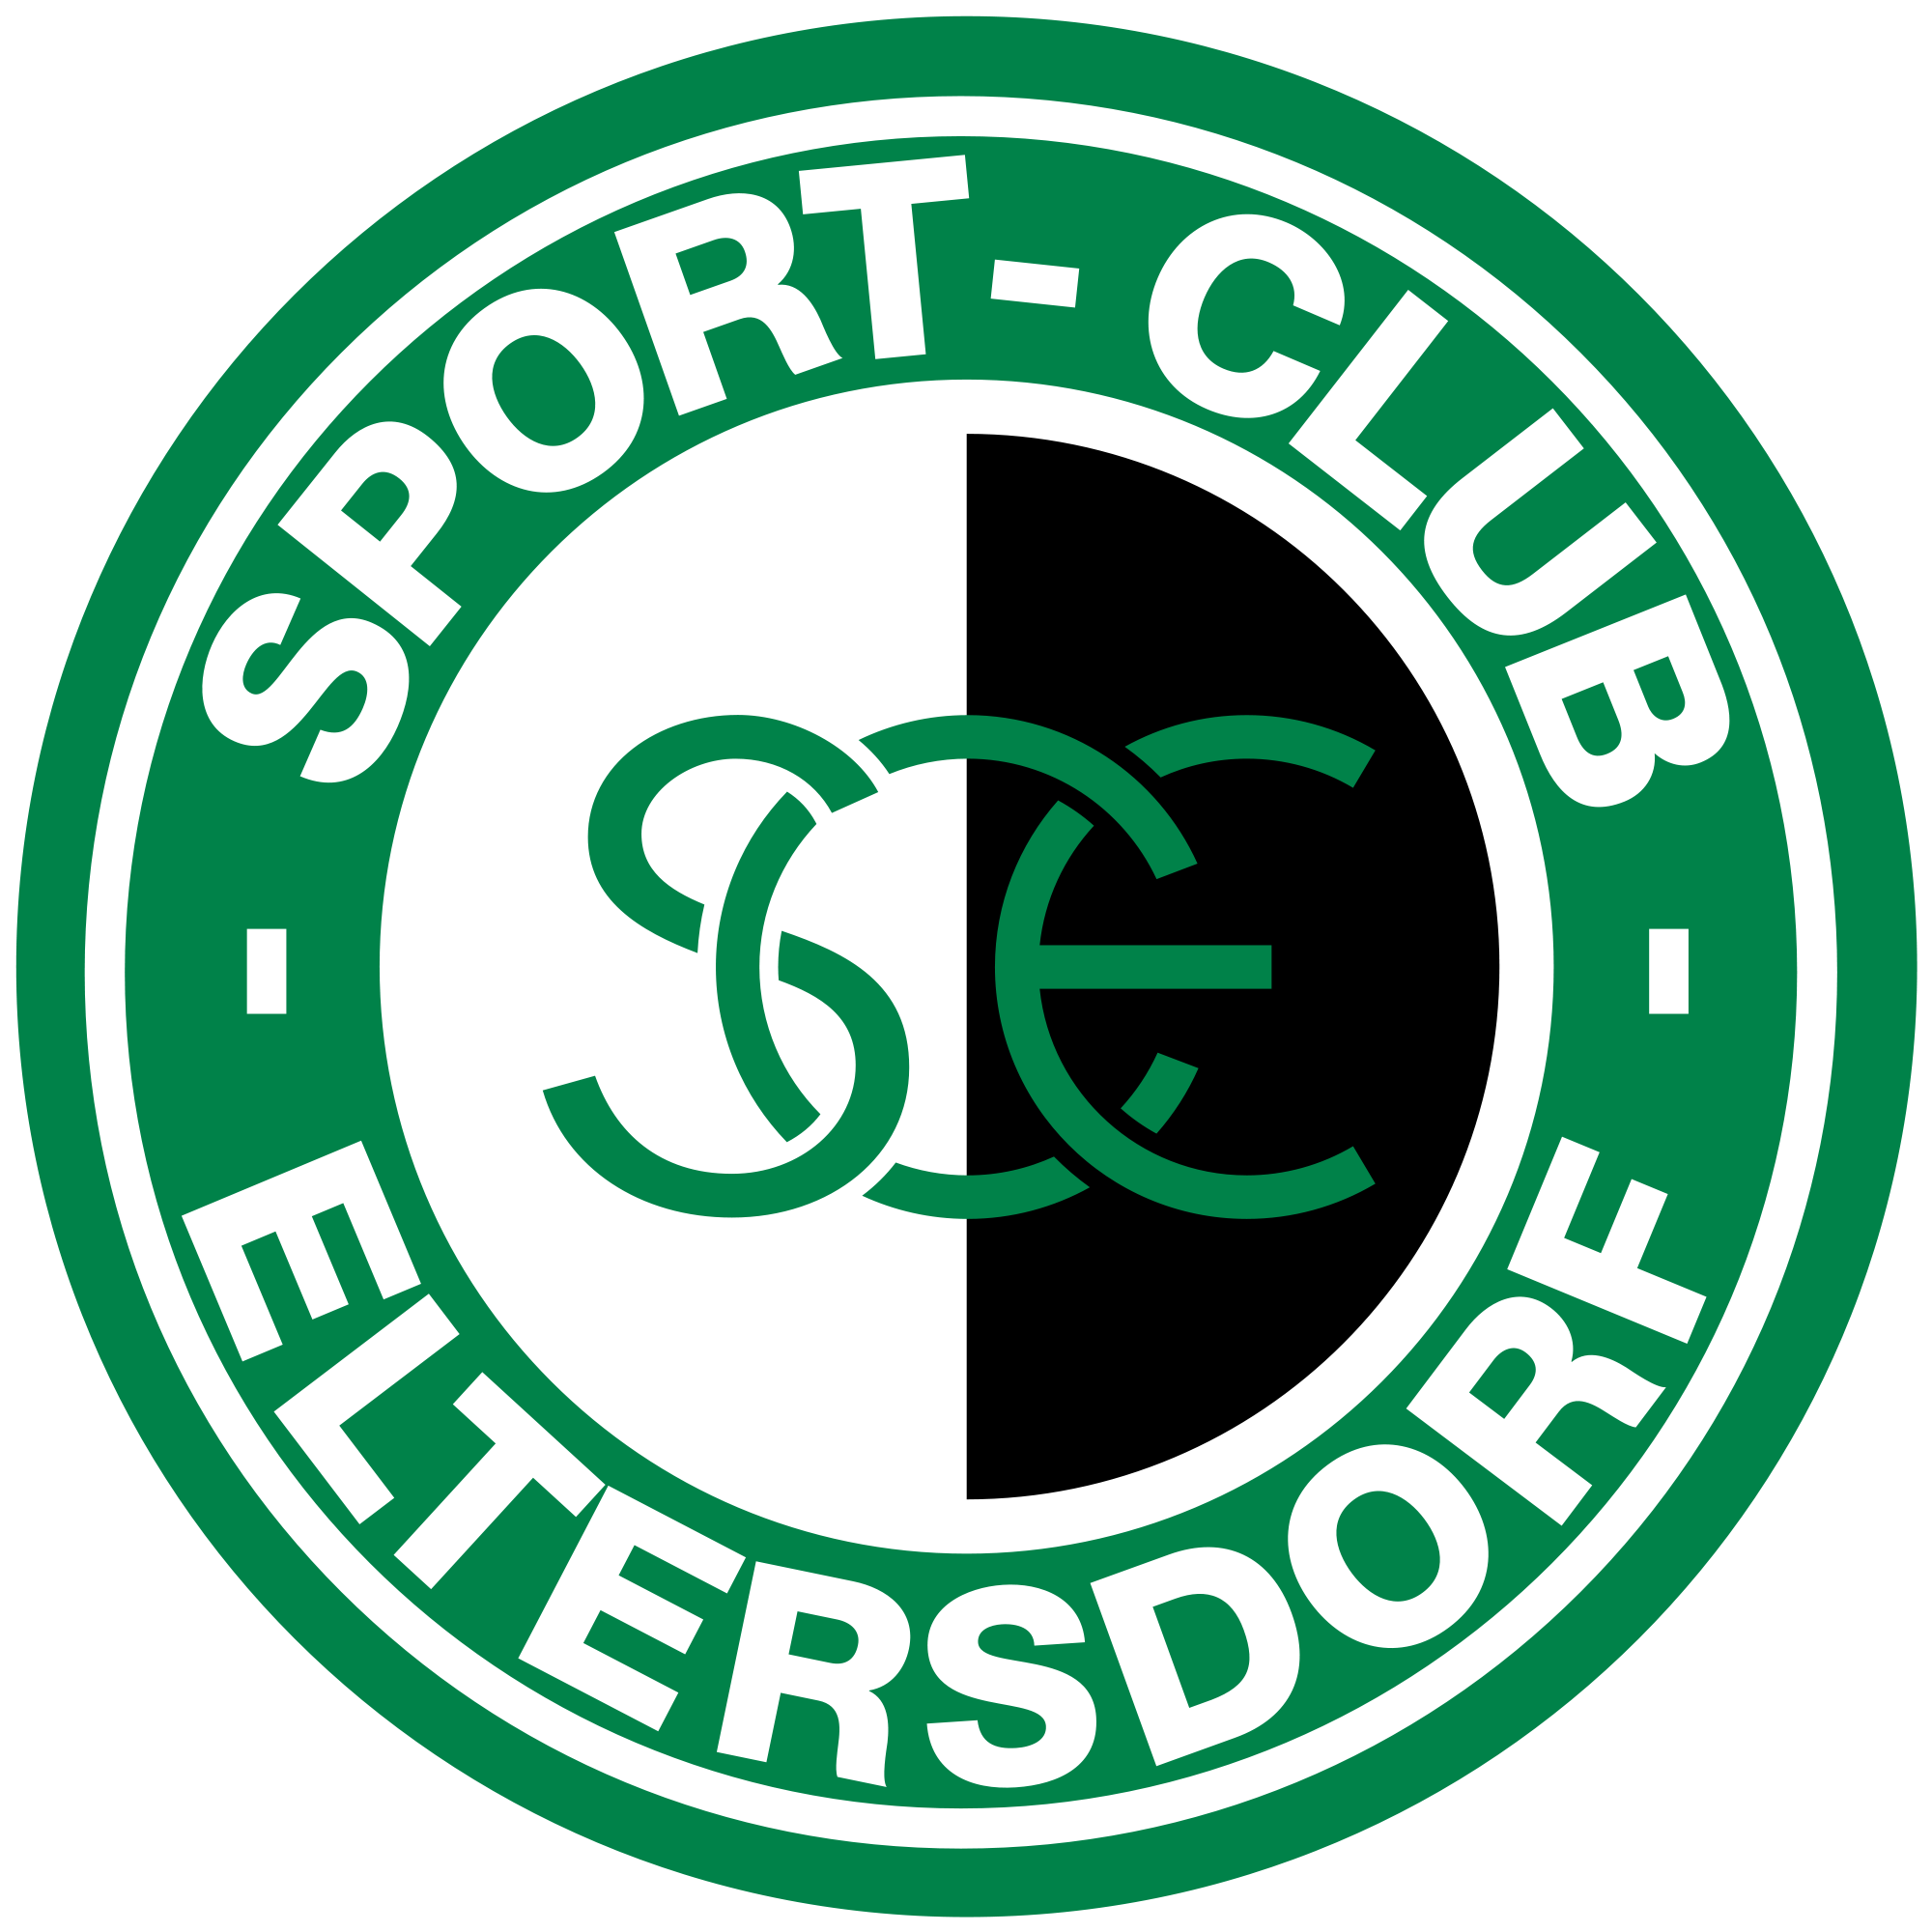 SC Eltersdorf